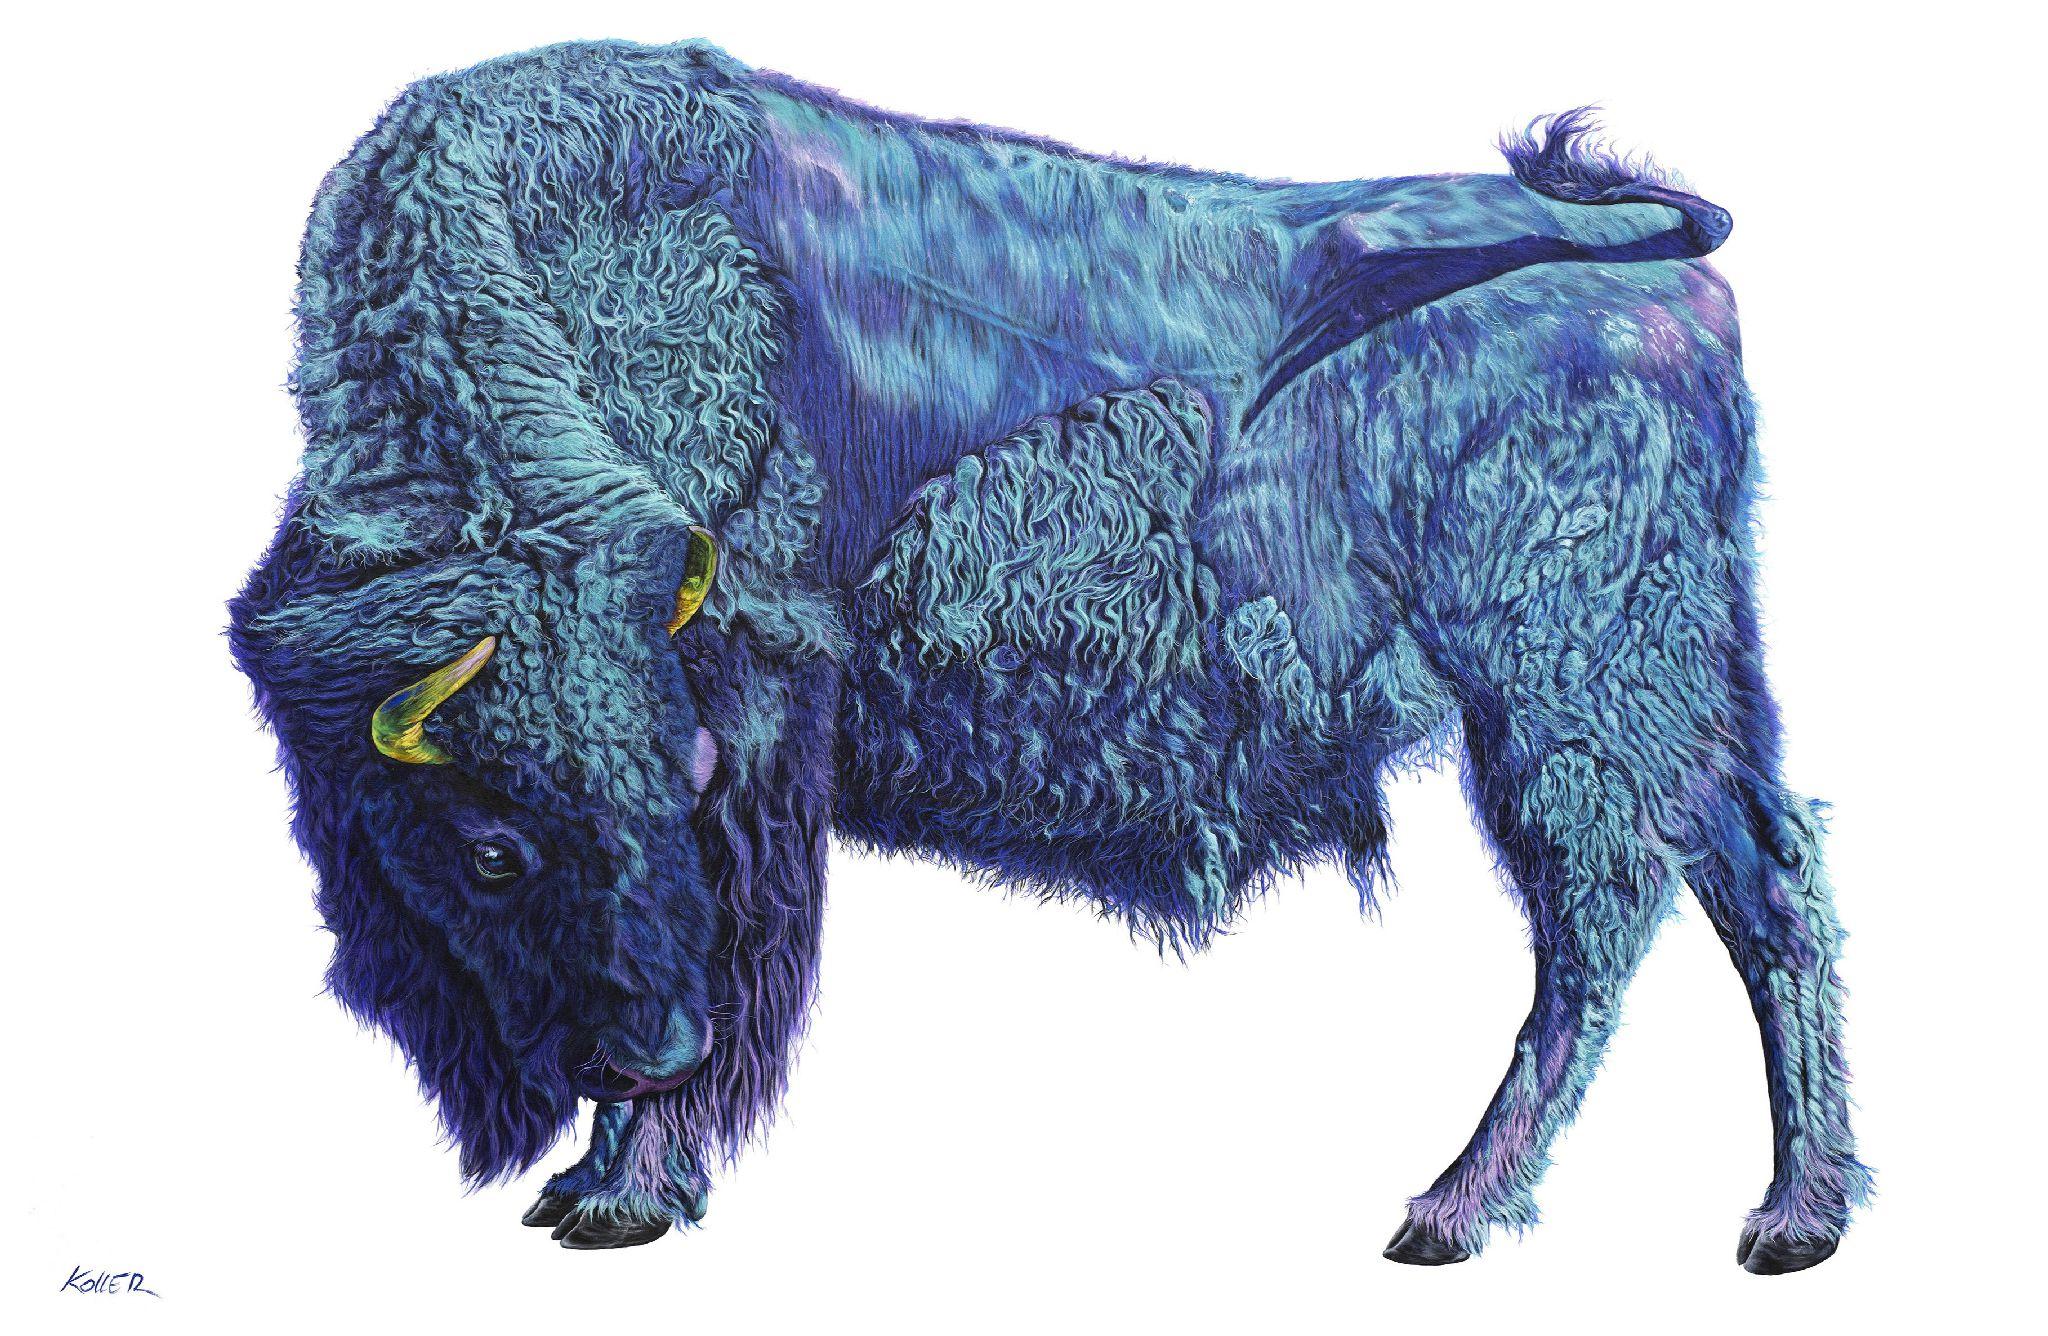 Helmut Koller Animal Painting - Bison on White